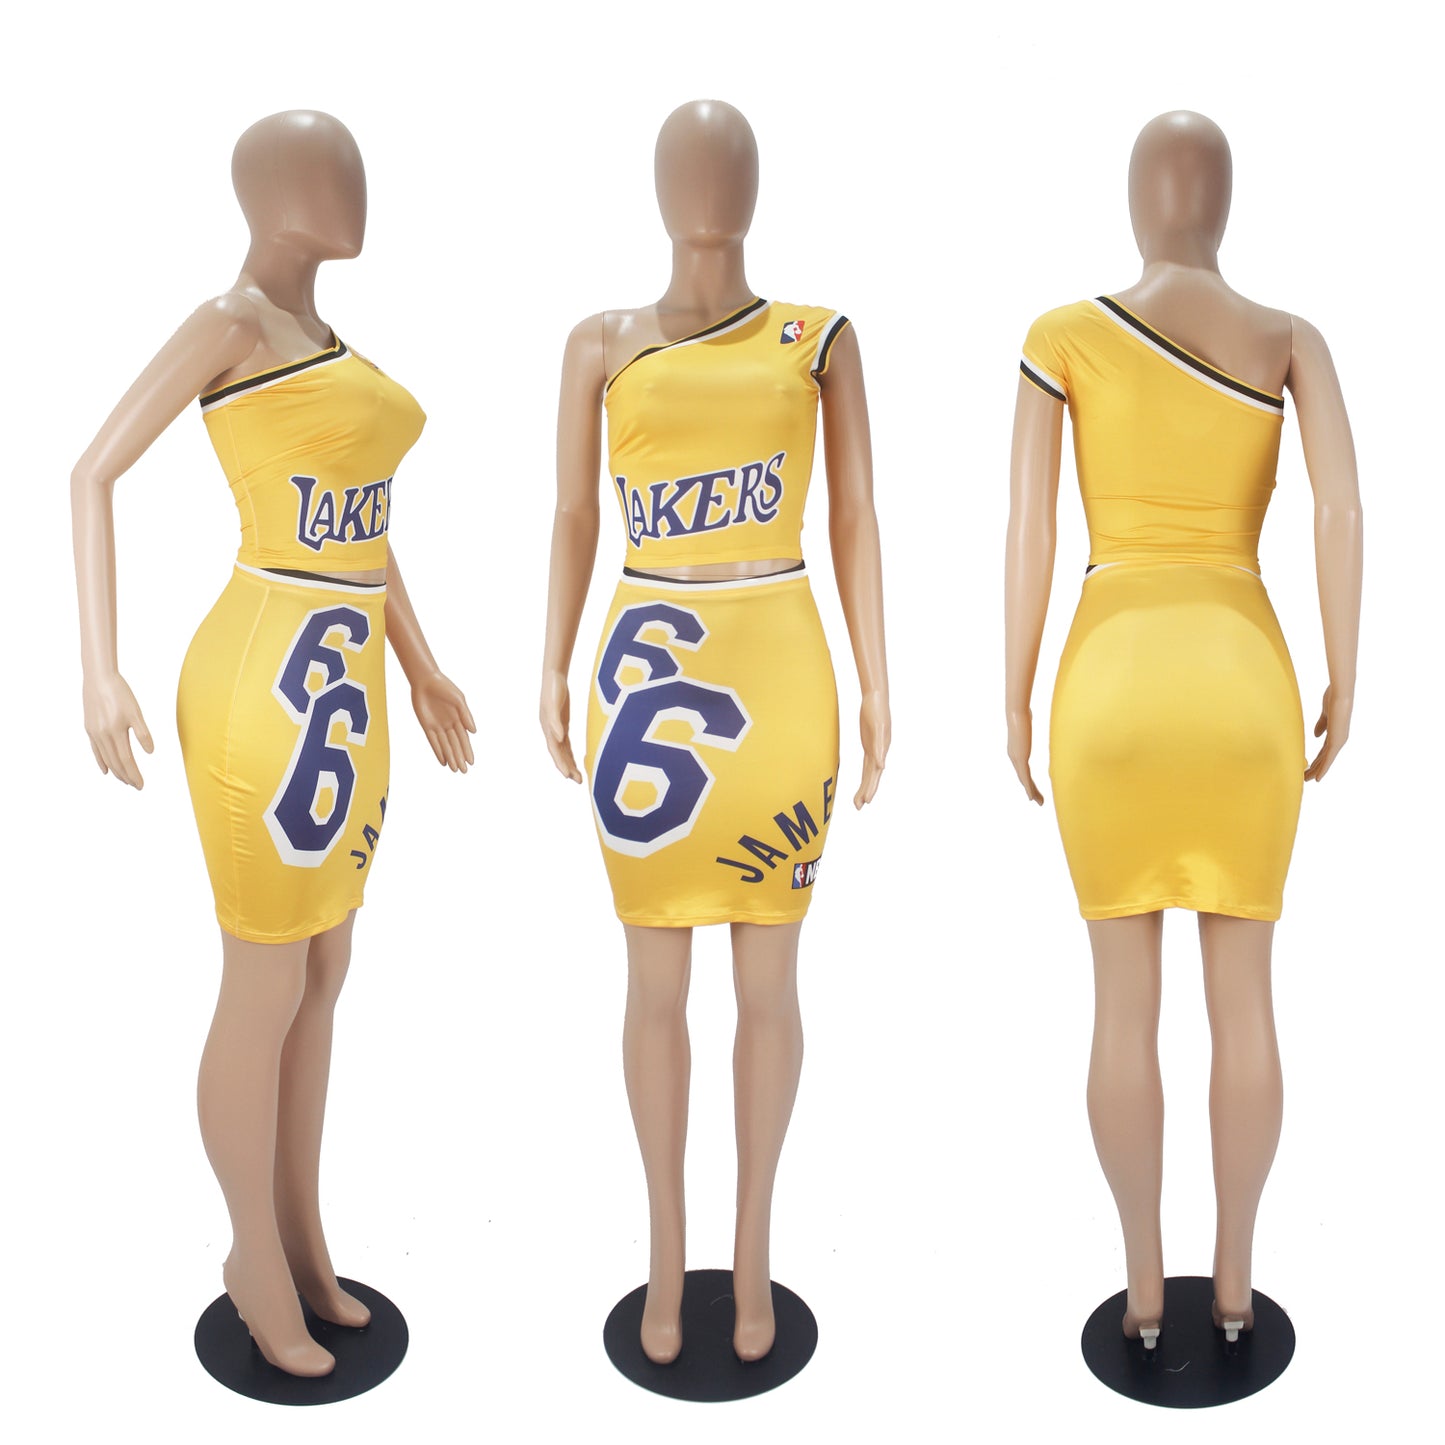 James (Lakers) Dress